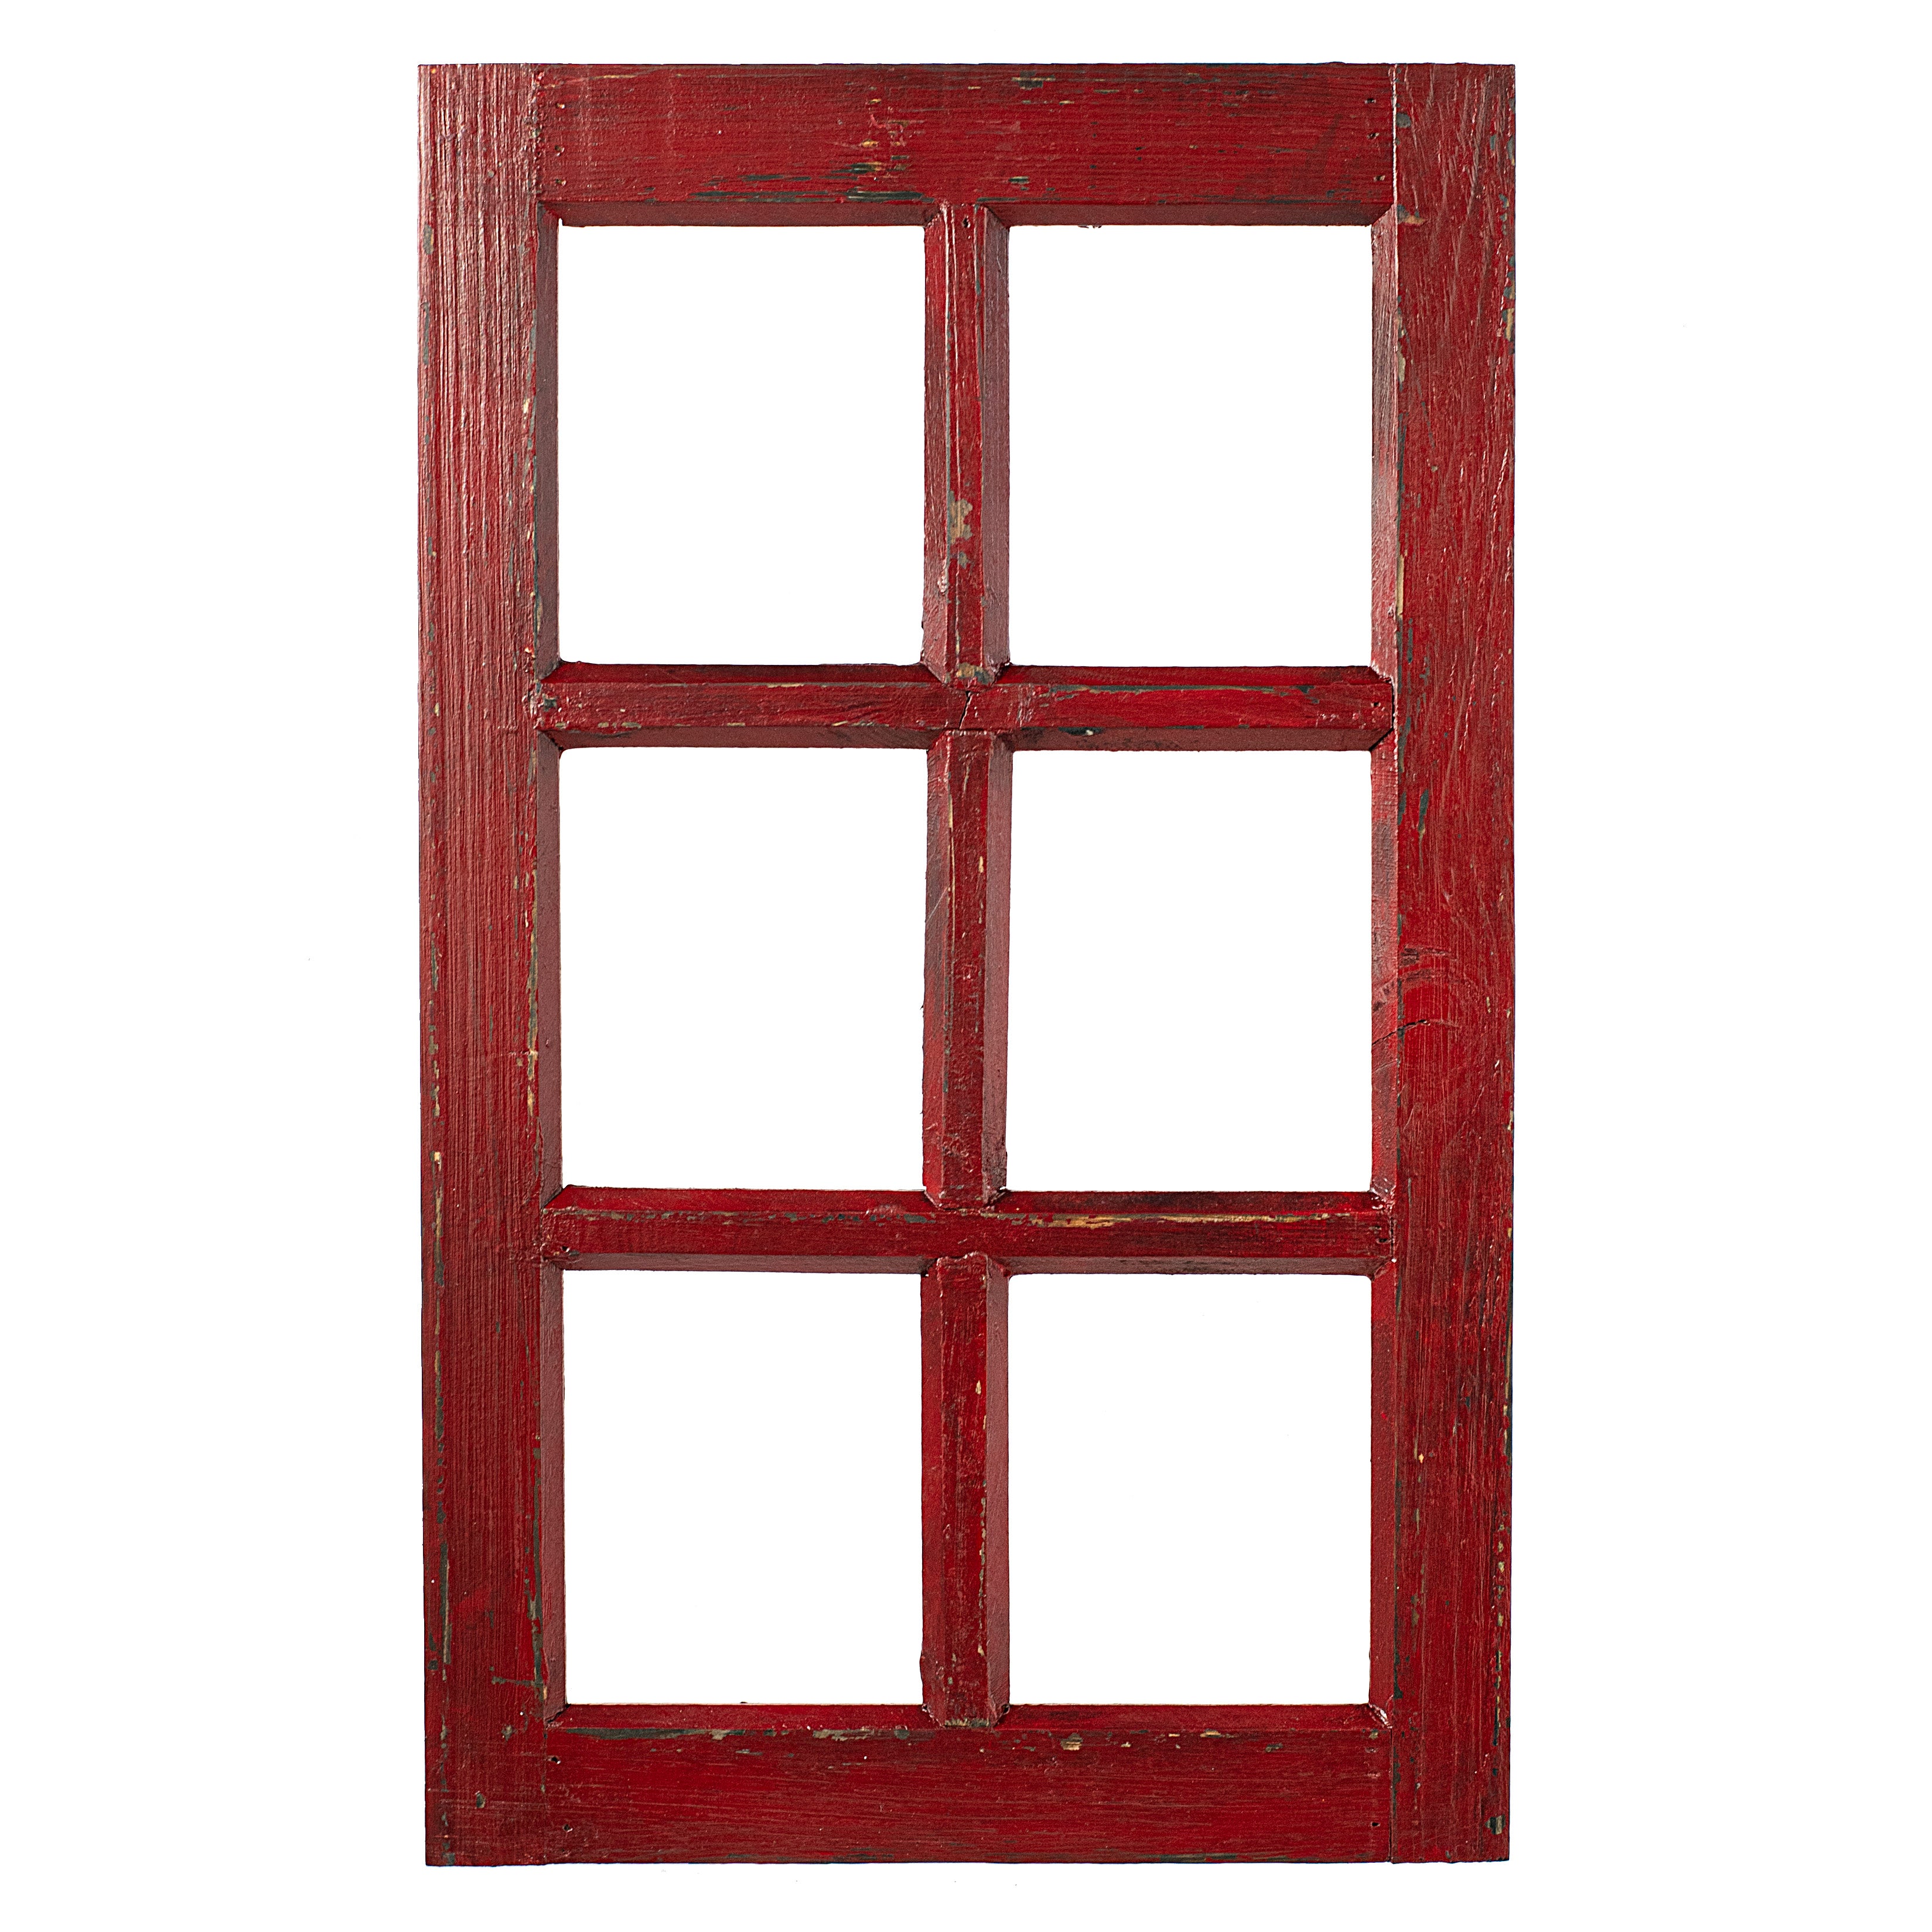 20" Decorative Wood Window: Antique Red